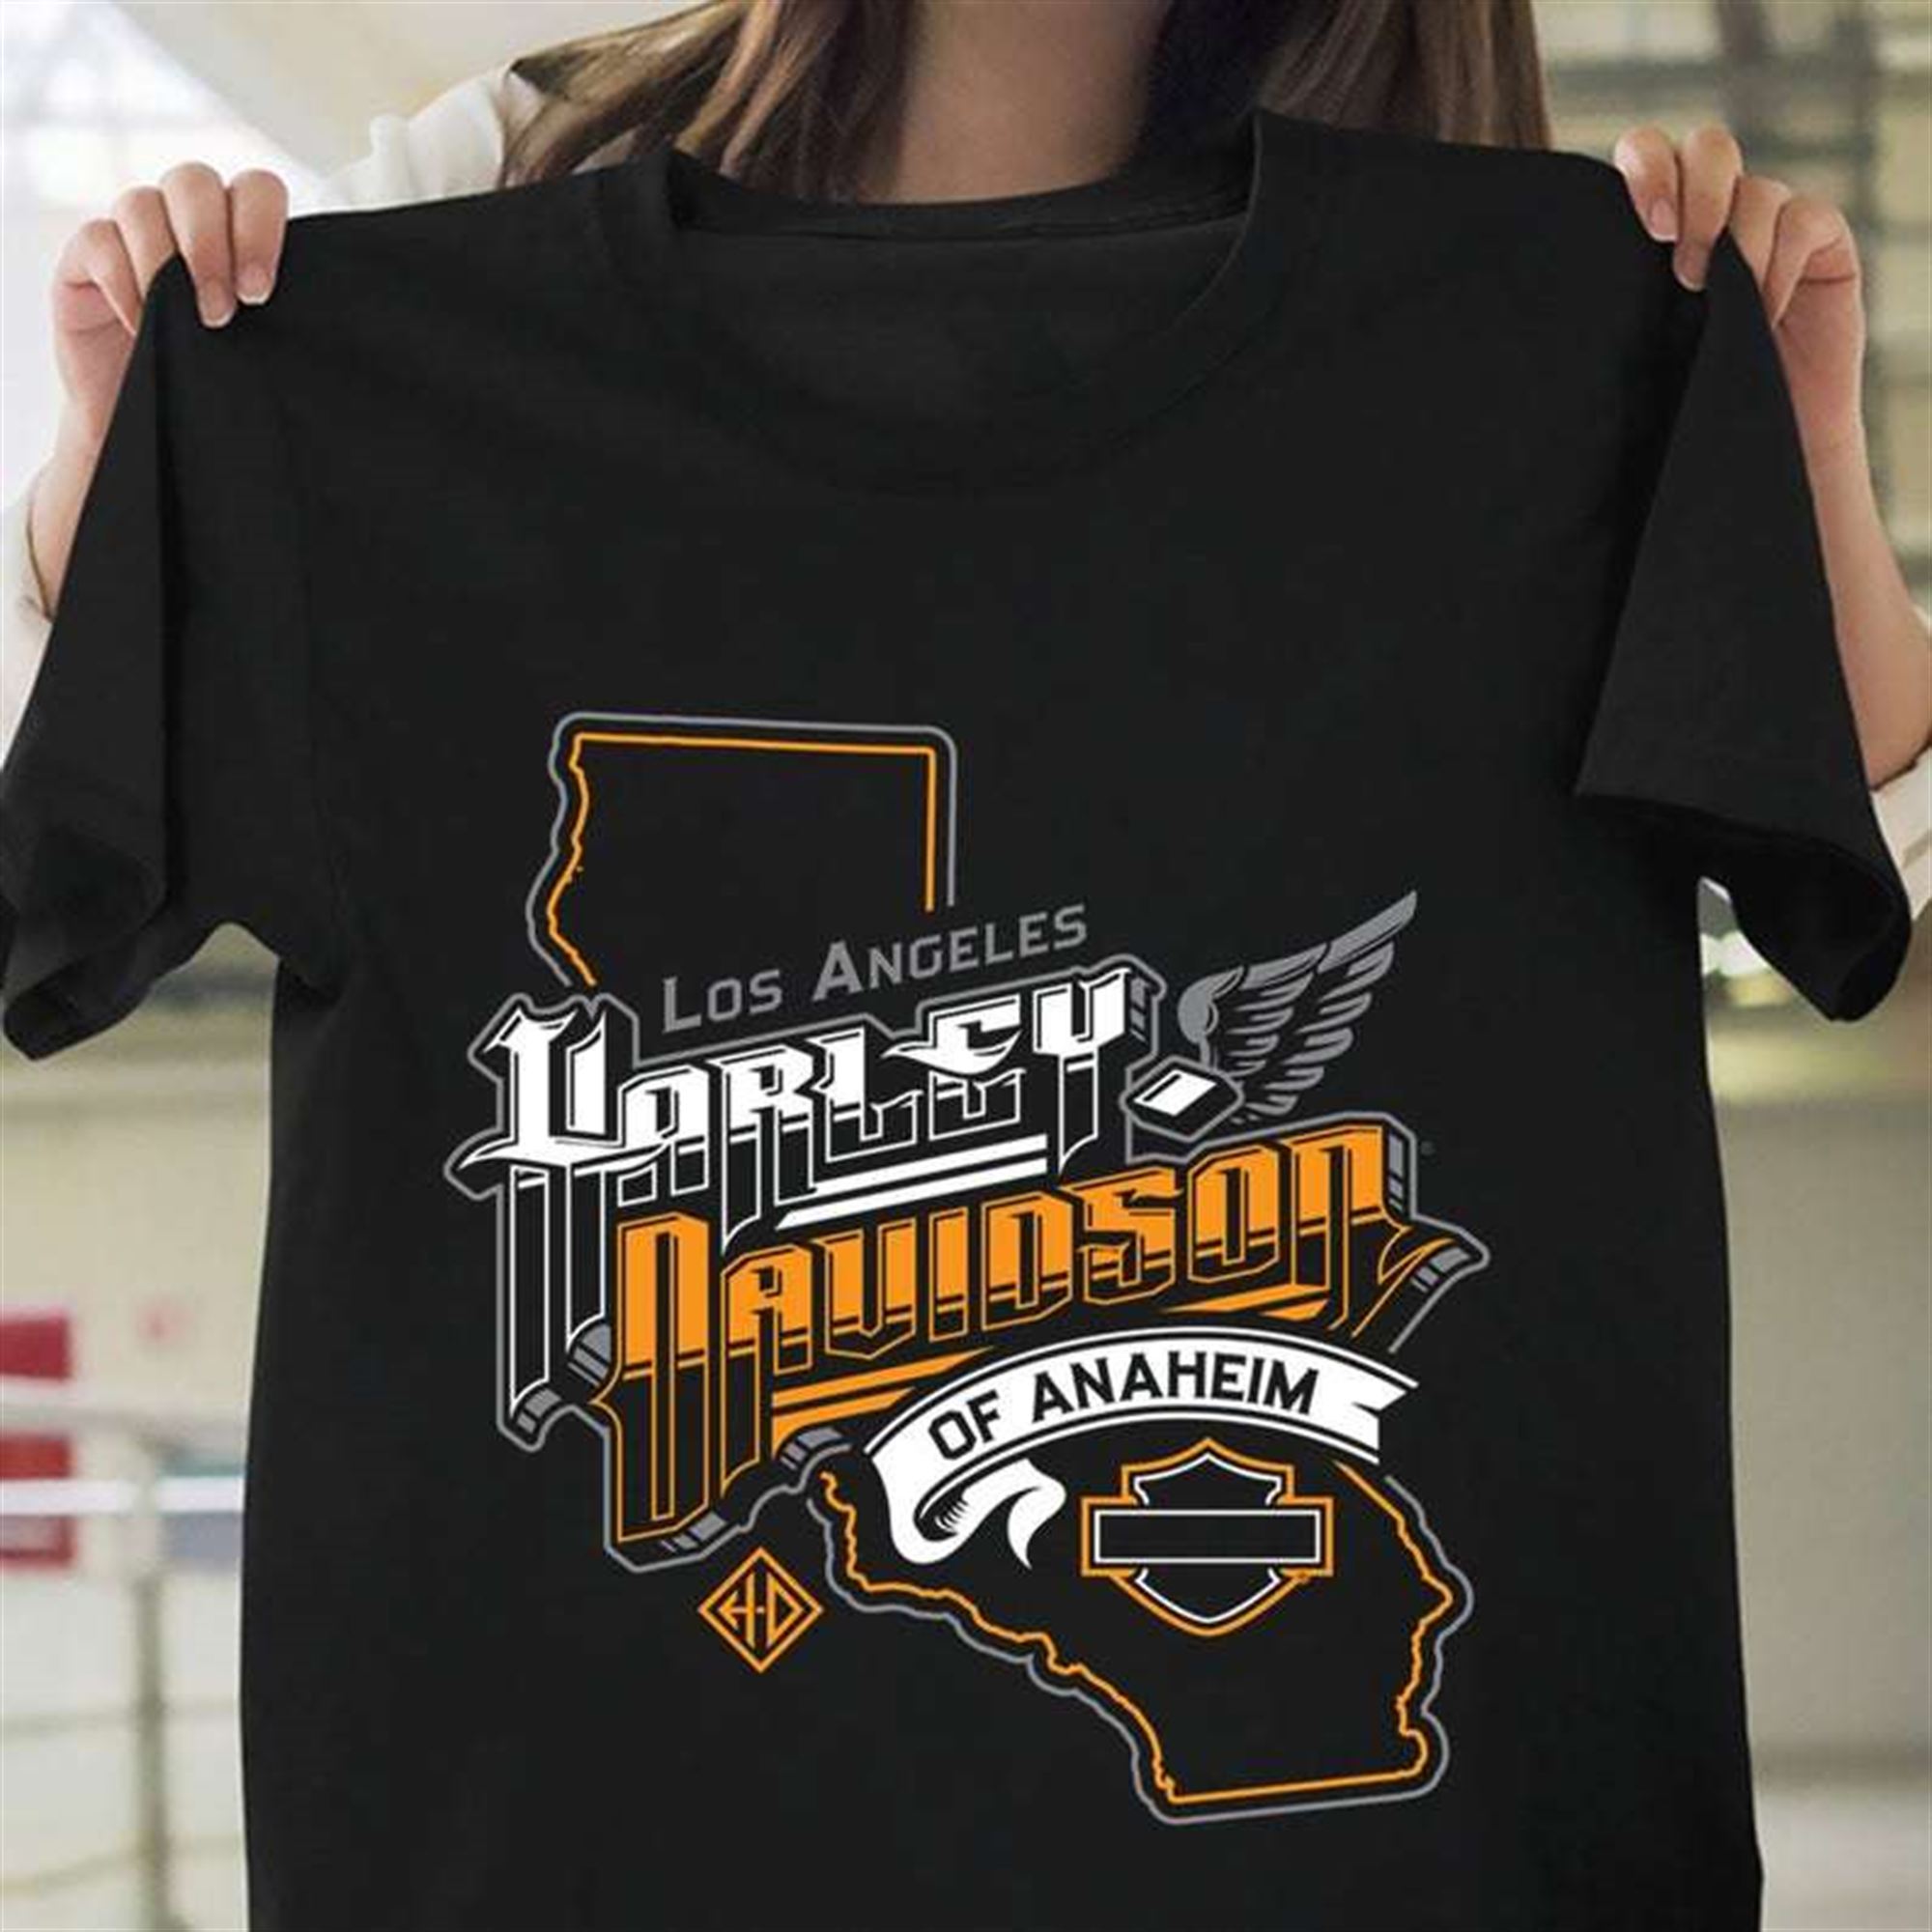 Los Angeles Harley Davidson Of Anaheim Unisex Black T-shirt Full Size Up To 5xl